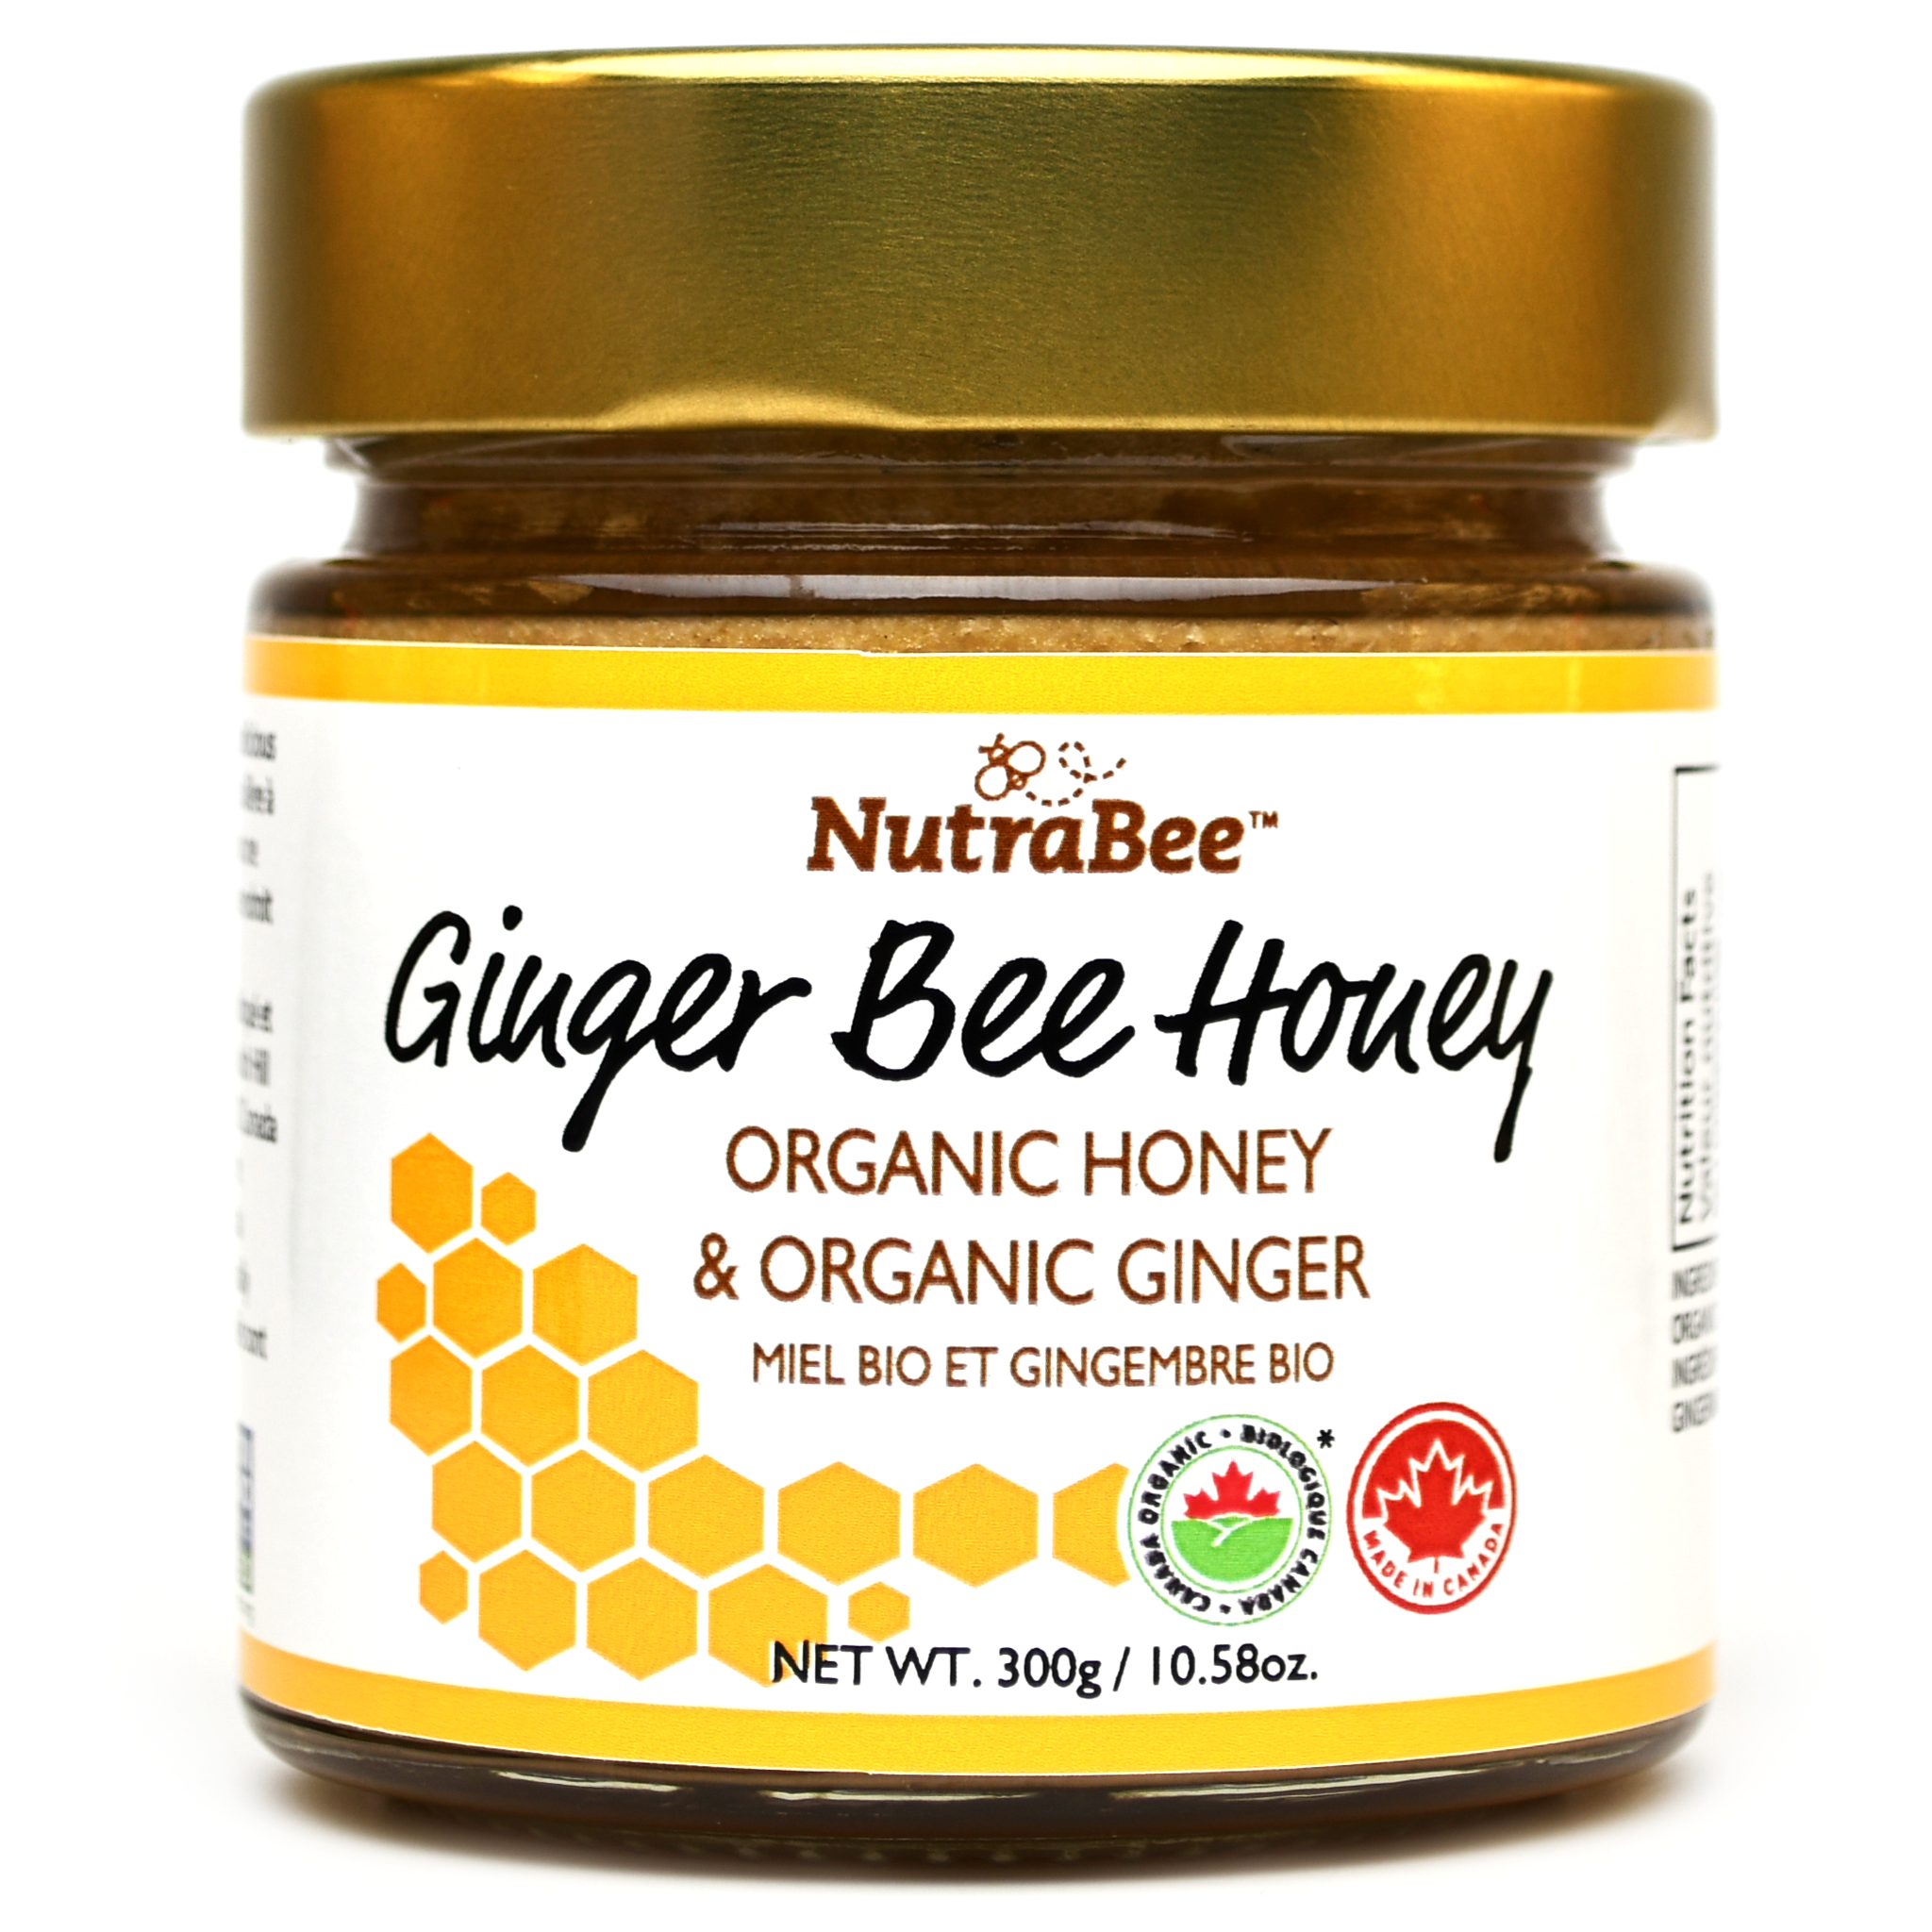 Organic Honey and Organic Ginger NutraBee